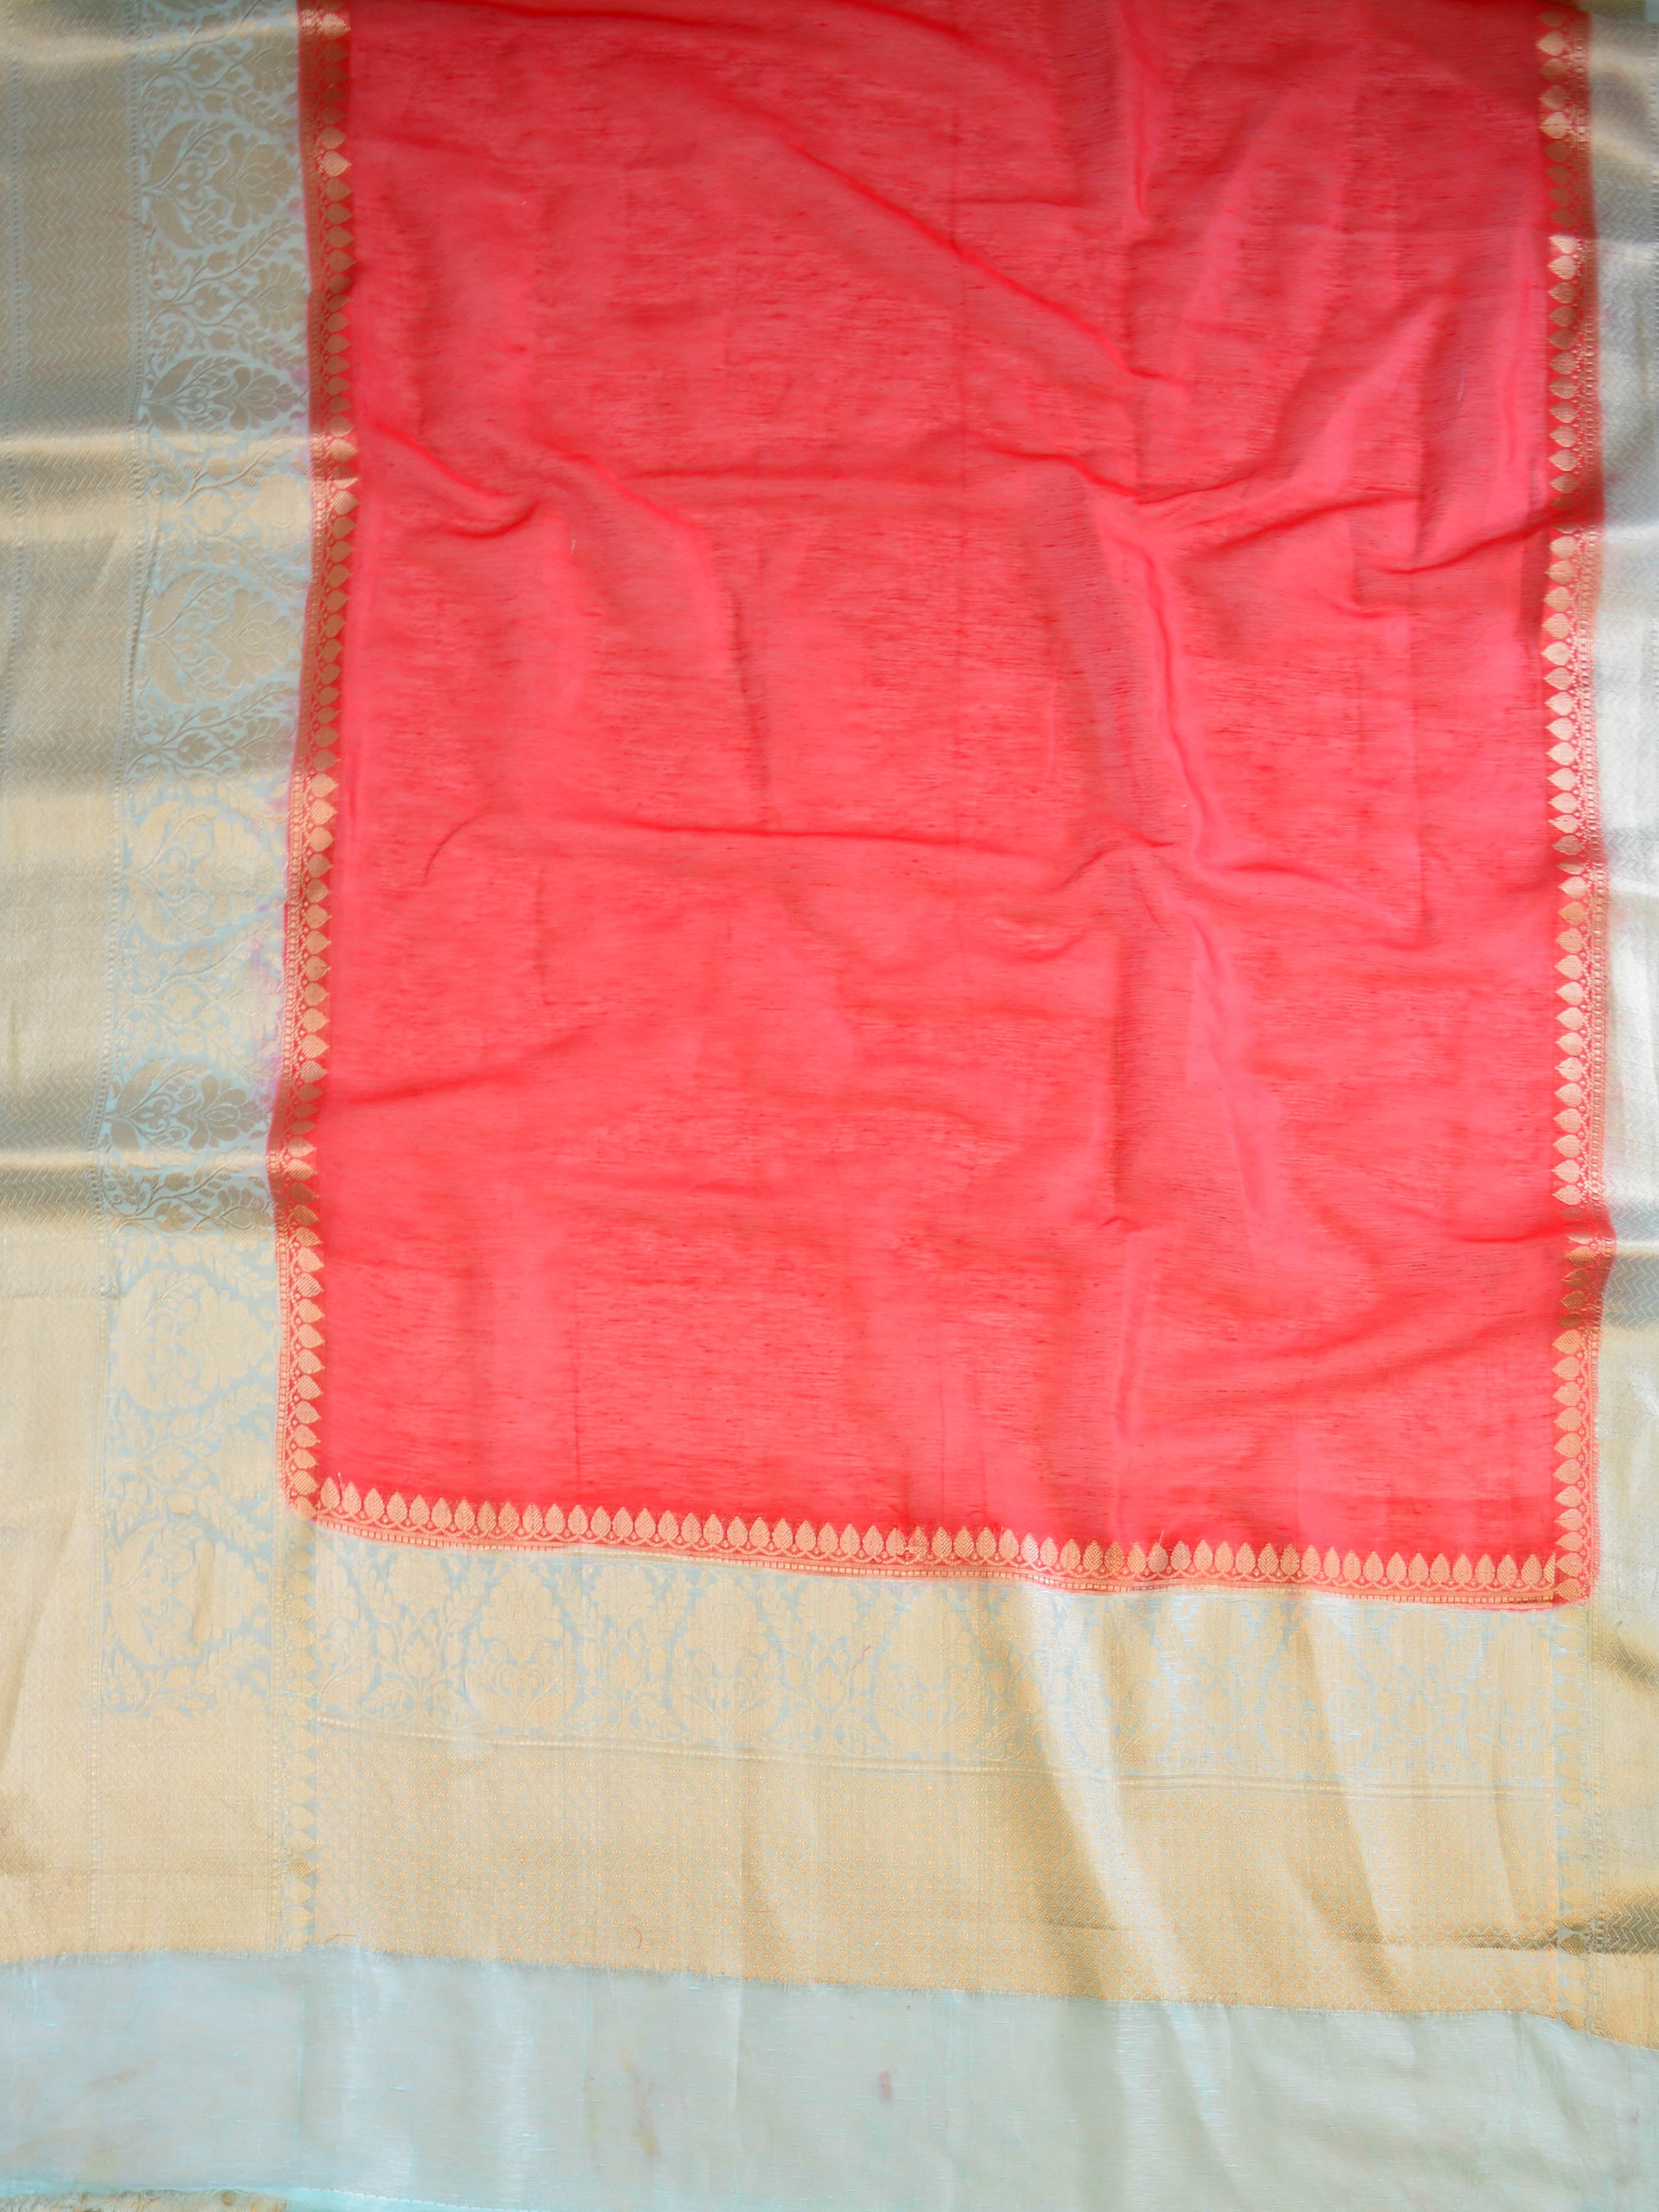 Banarasee Handloom Pure Linen Cotton Gold Zari Saree-Red & Blue